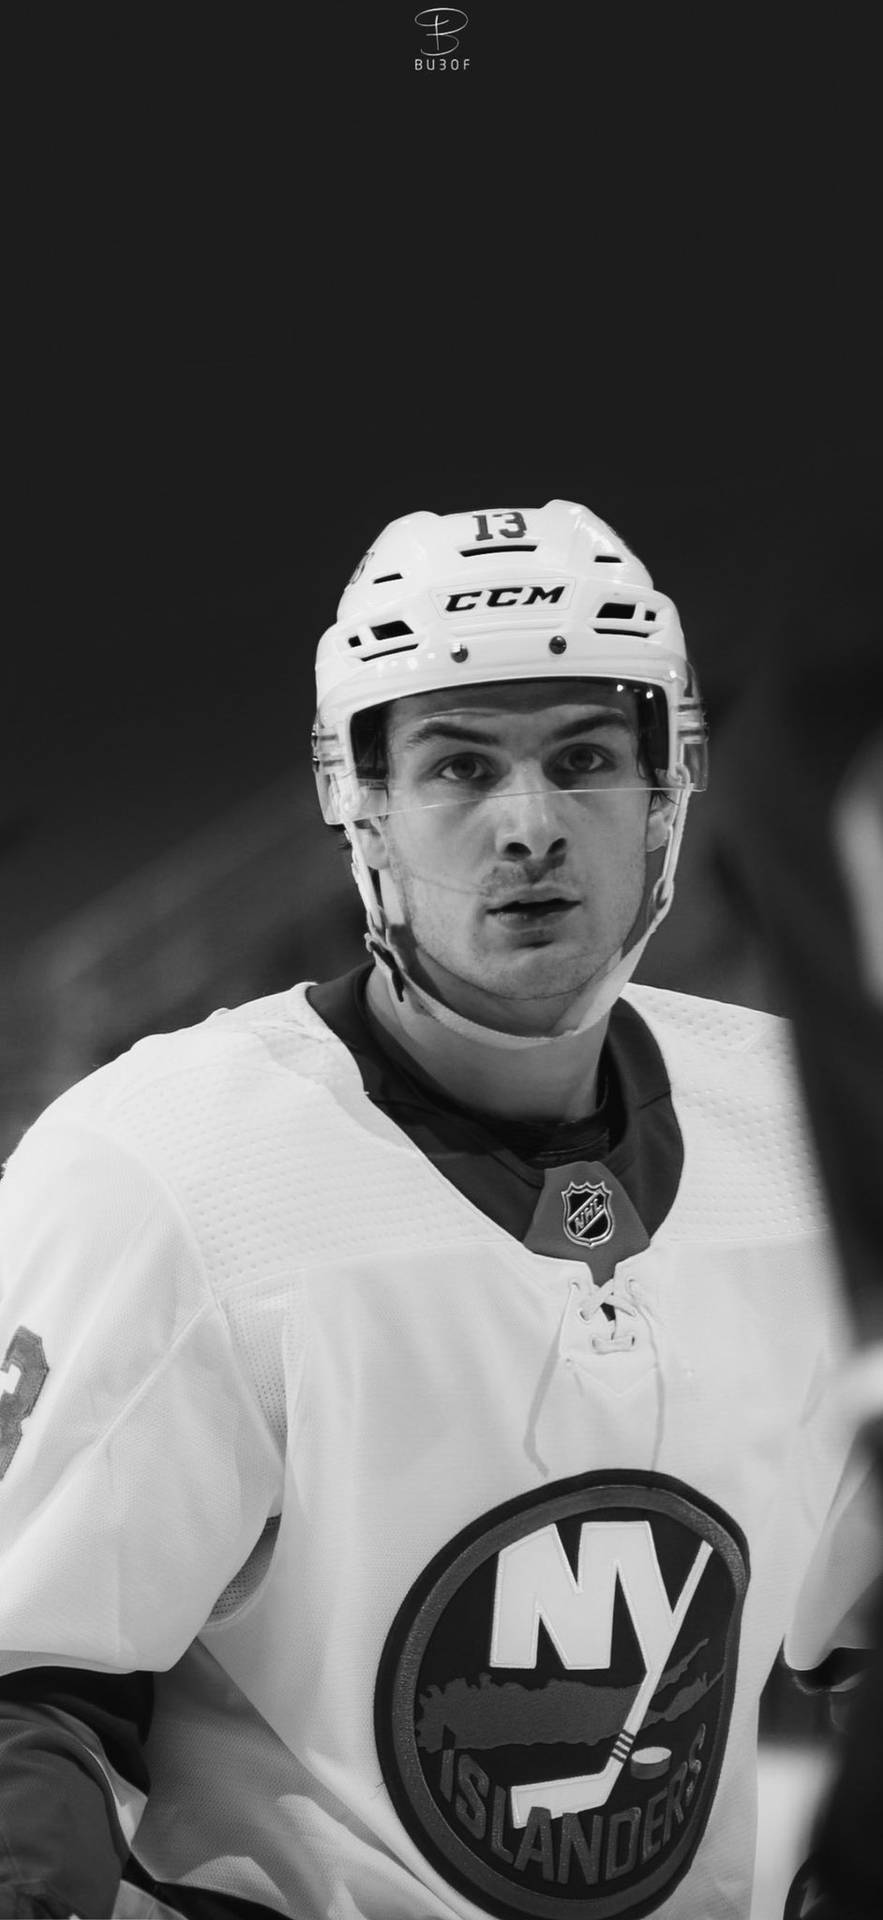 Canadian Ice Hockey Player Mathew Barzal Monochrome Portrait Wallpaper